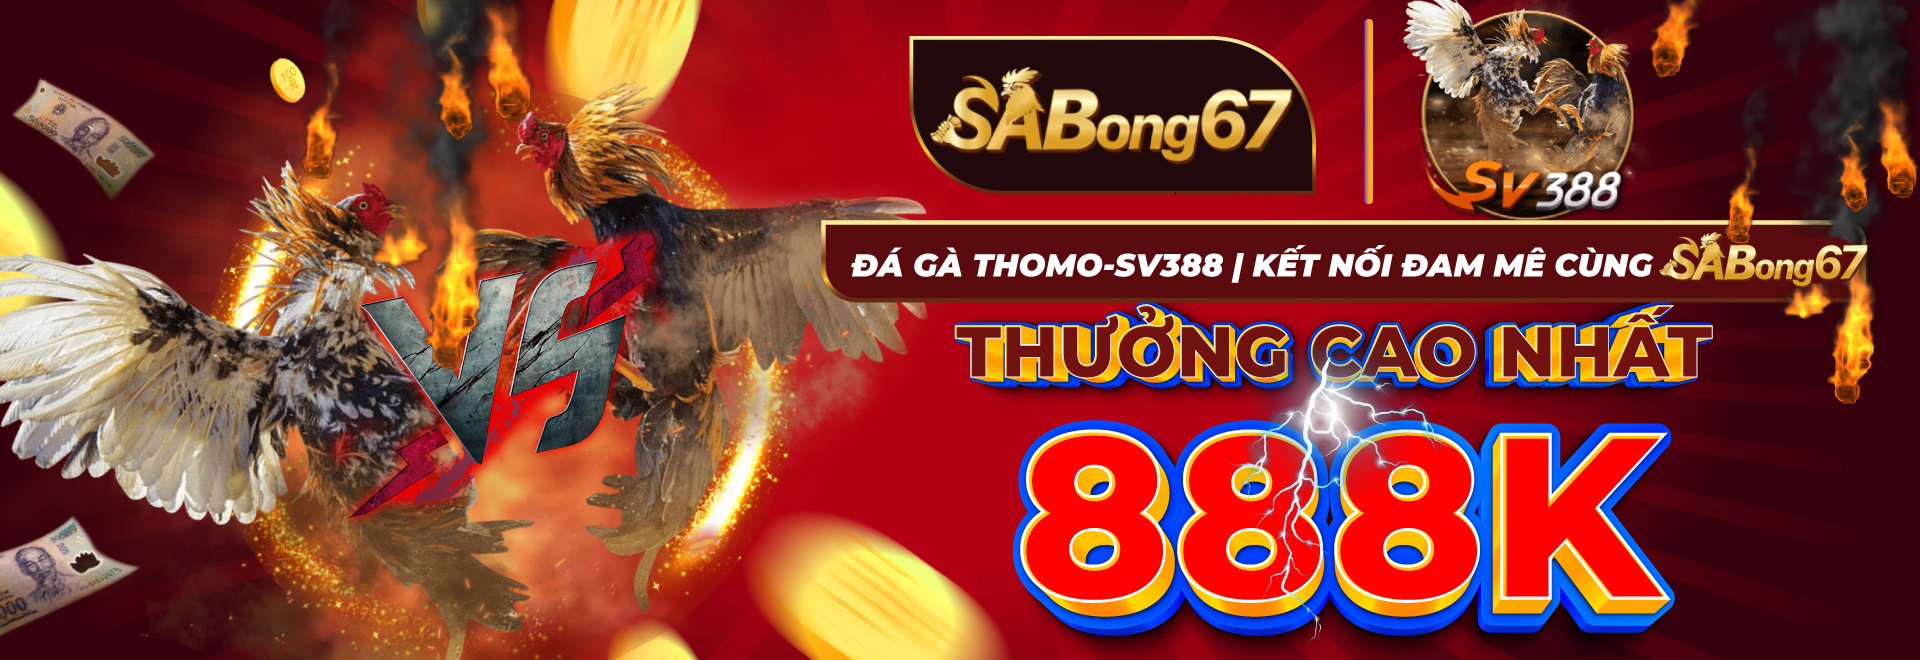 banner sabong67 games